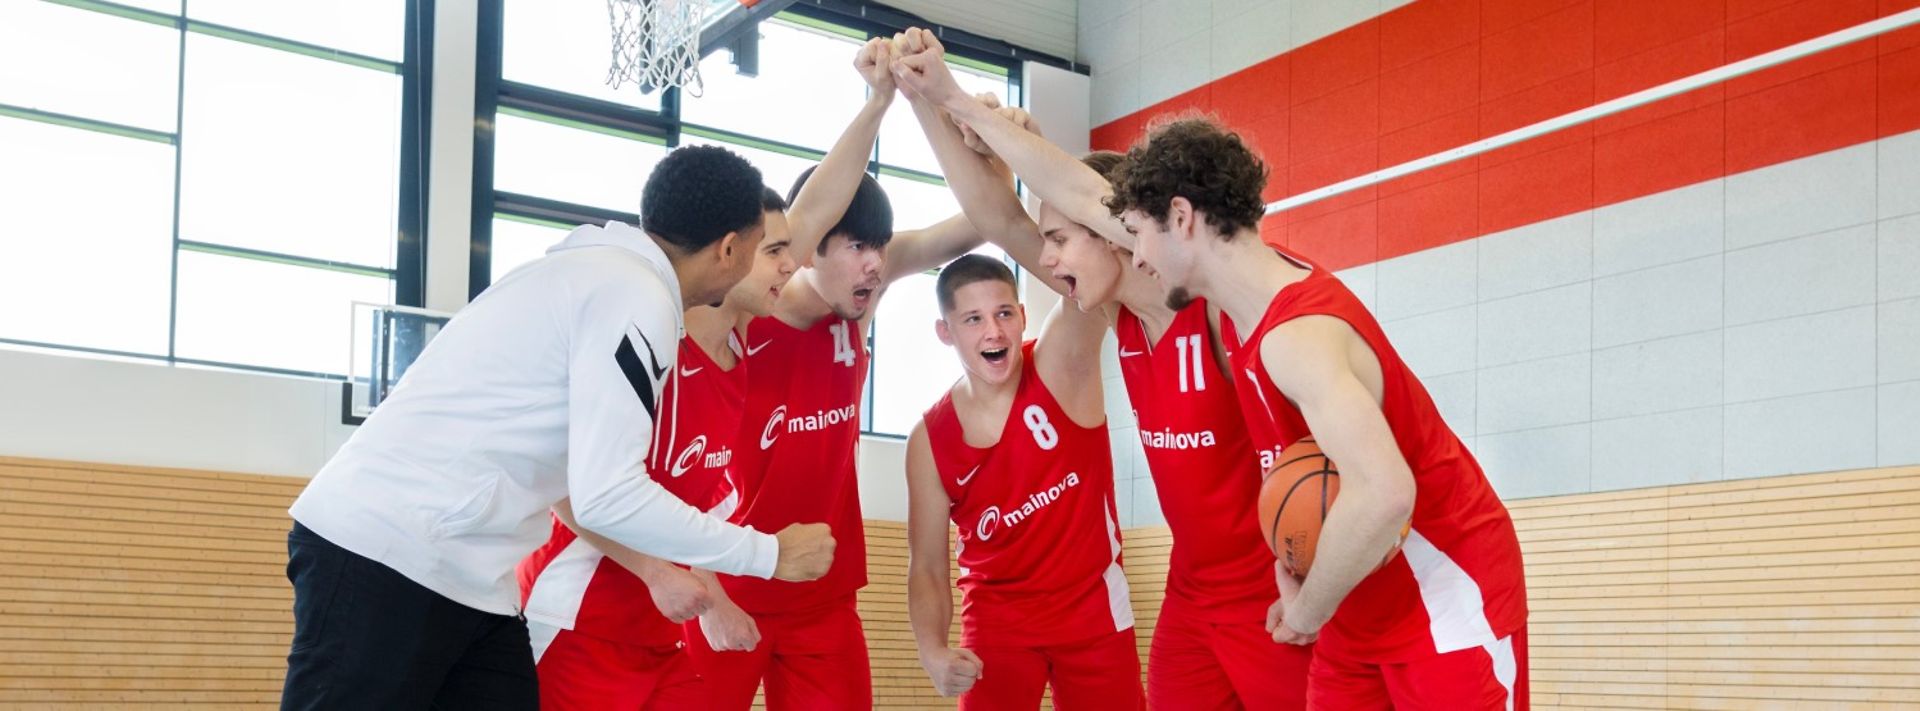 Gruppe einer Handball-Jugendmannschaft gekleidet in Mainova-Trikots